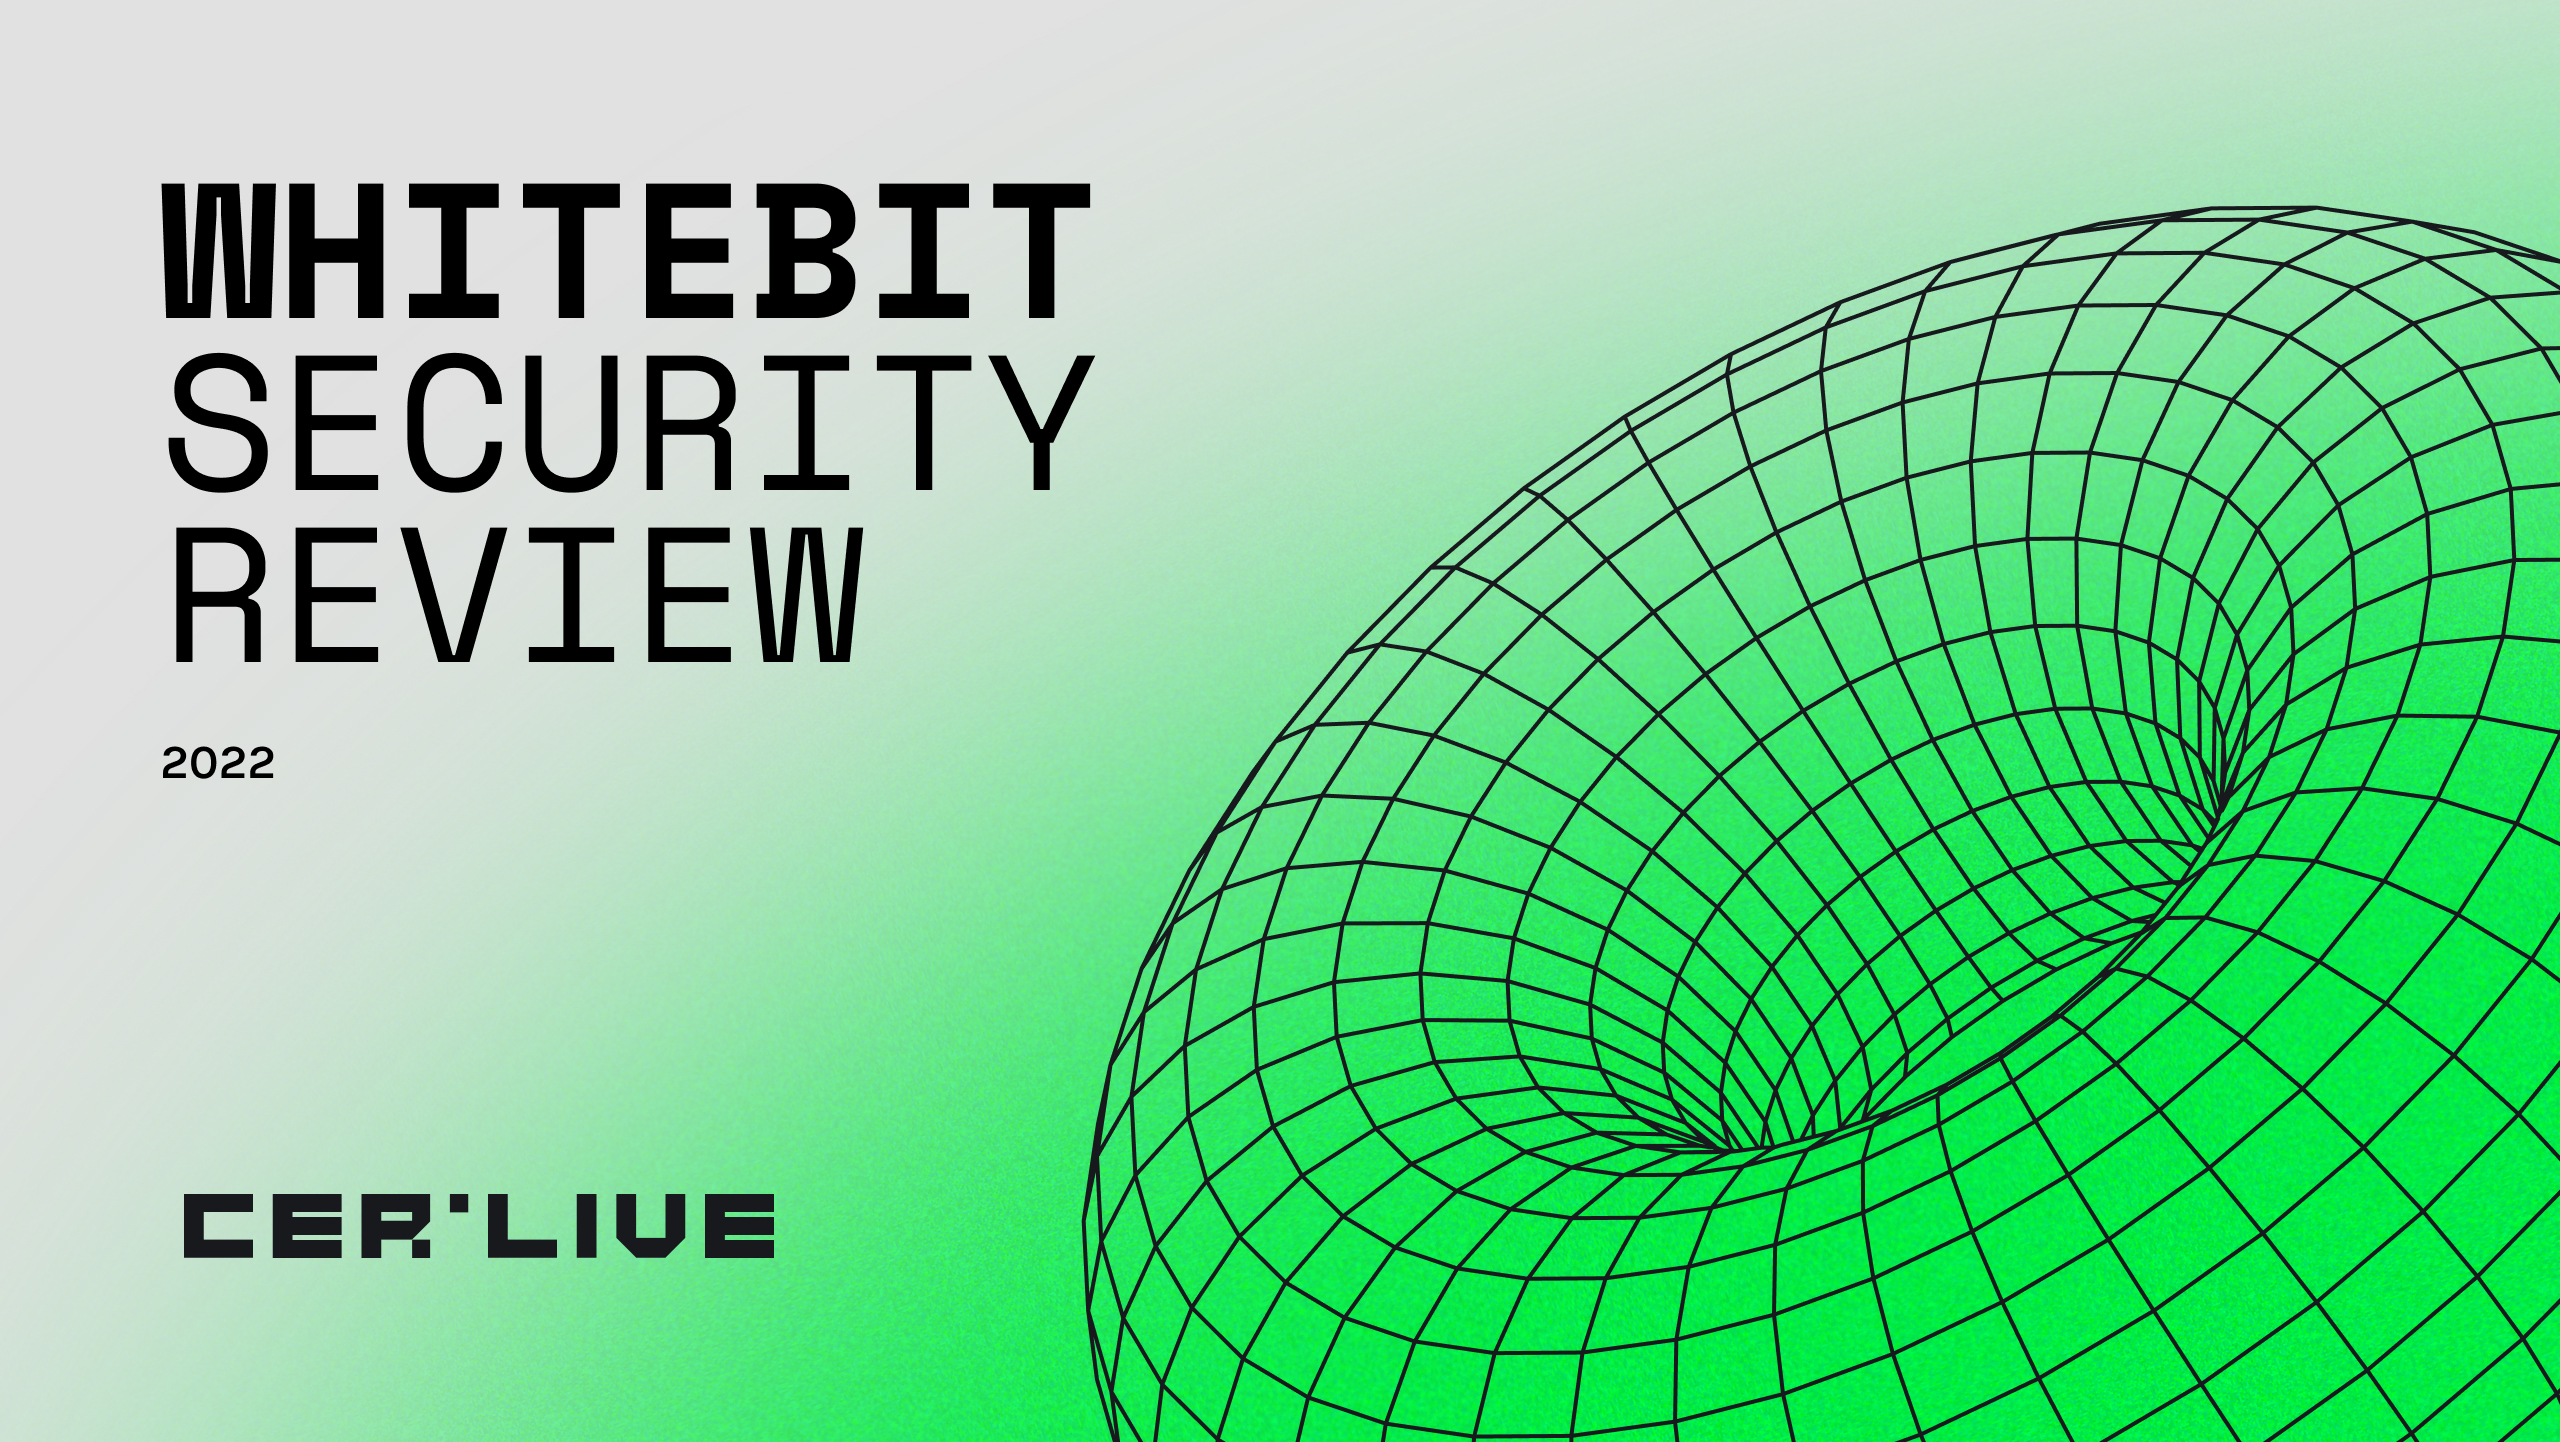 WhiteBIT Security Review 2022image